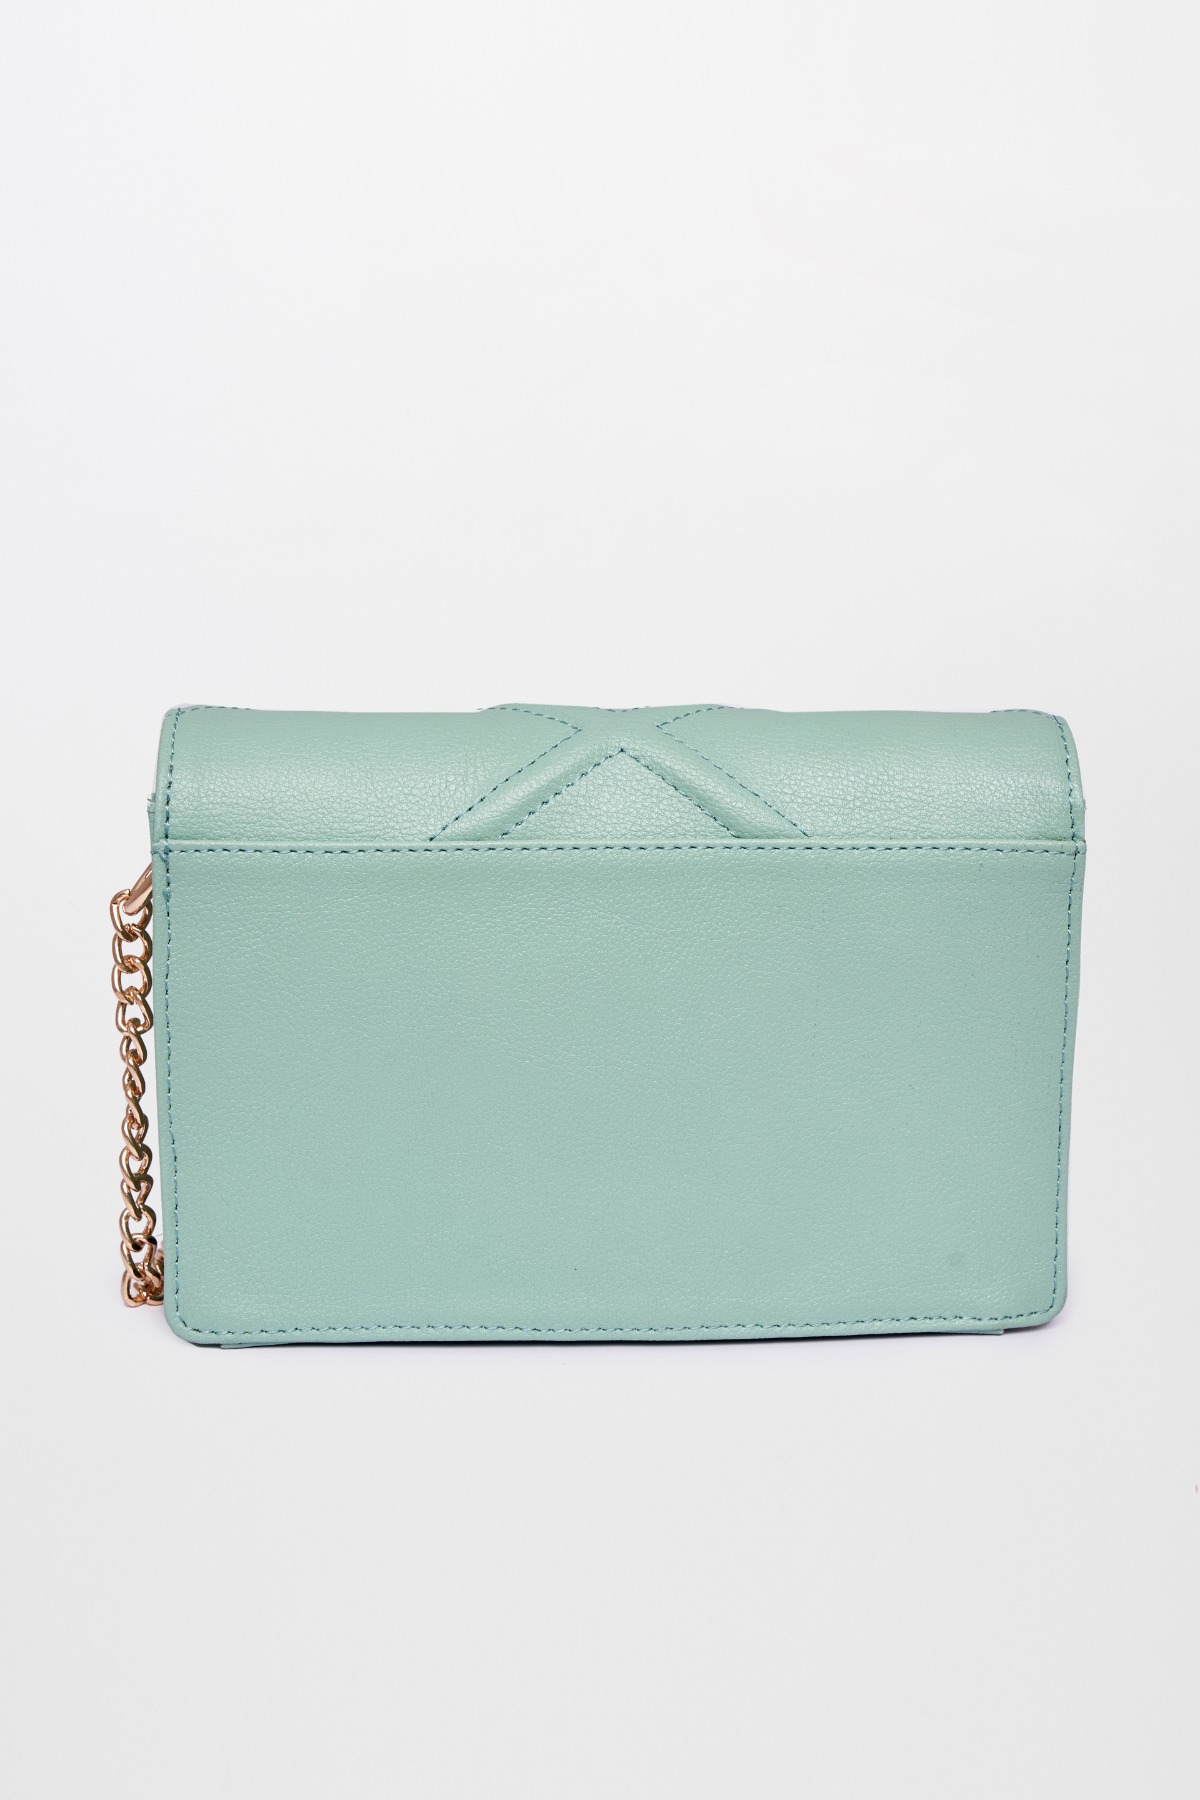 Michael Kors Whitney Women Ladies Medium Tote Shoulder Handbag Bag Purse  Green | eBay